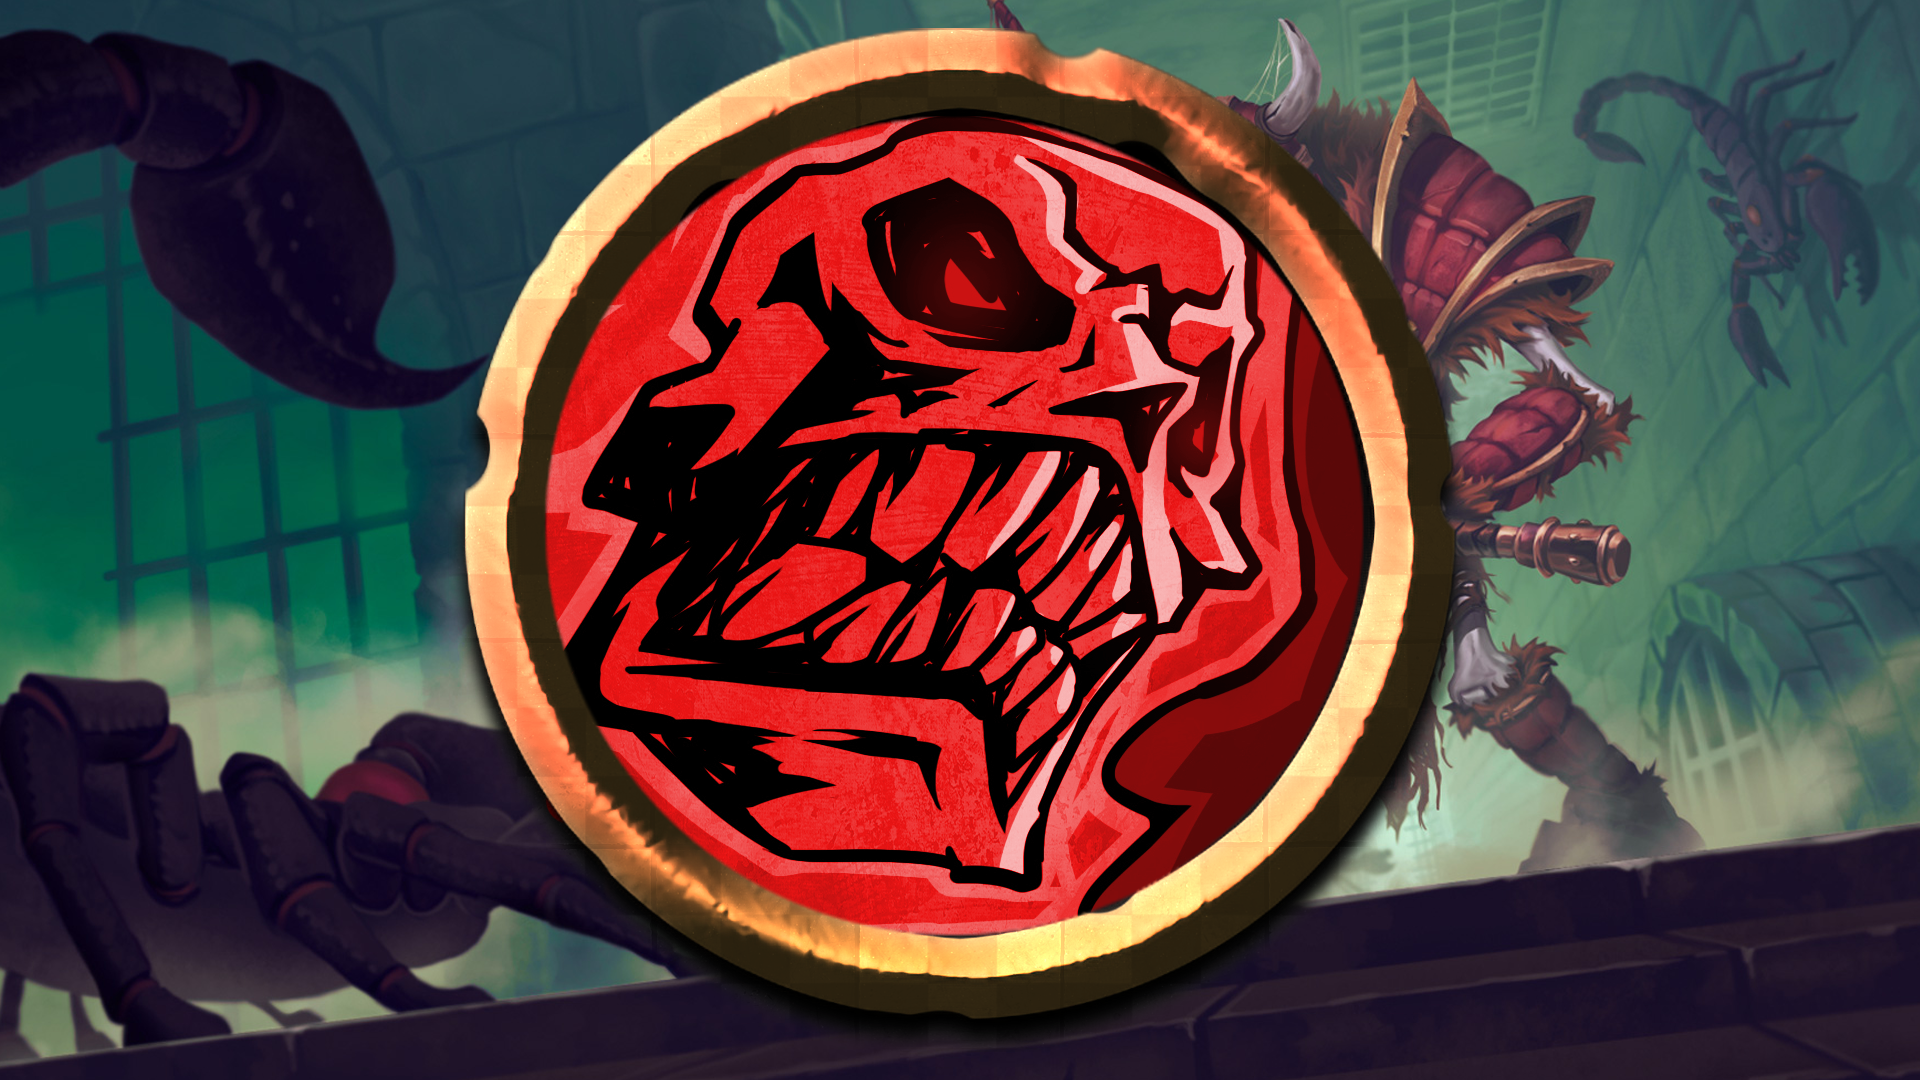 Icon for Doom Skull